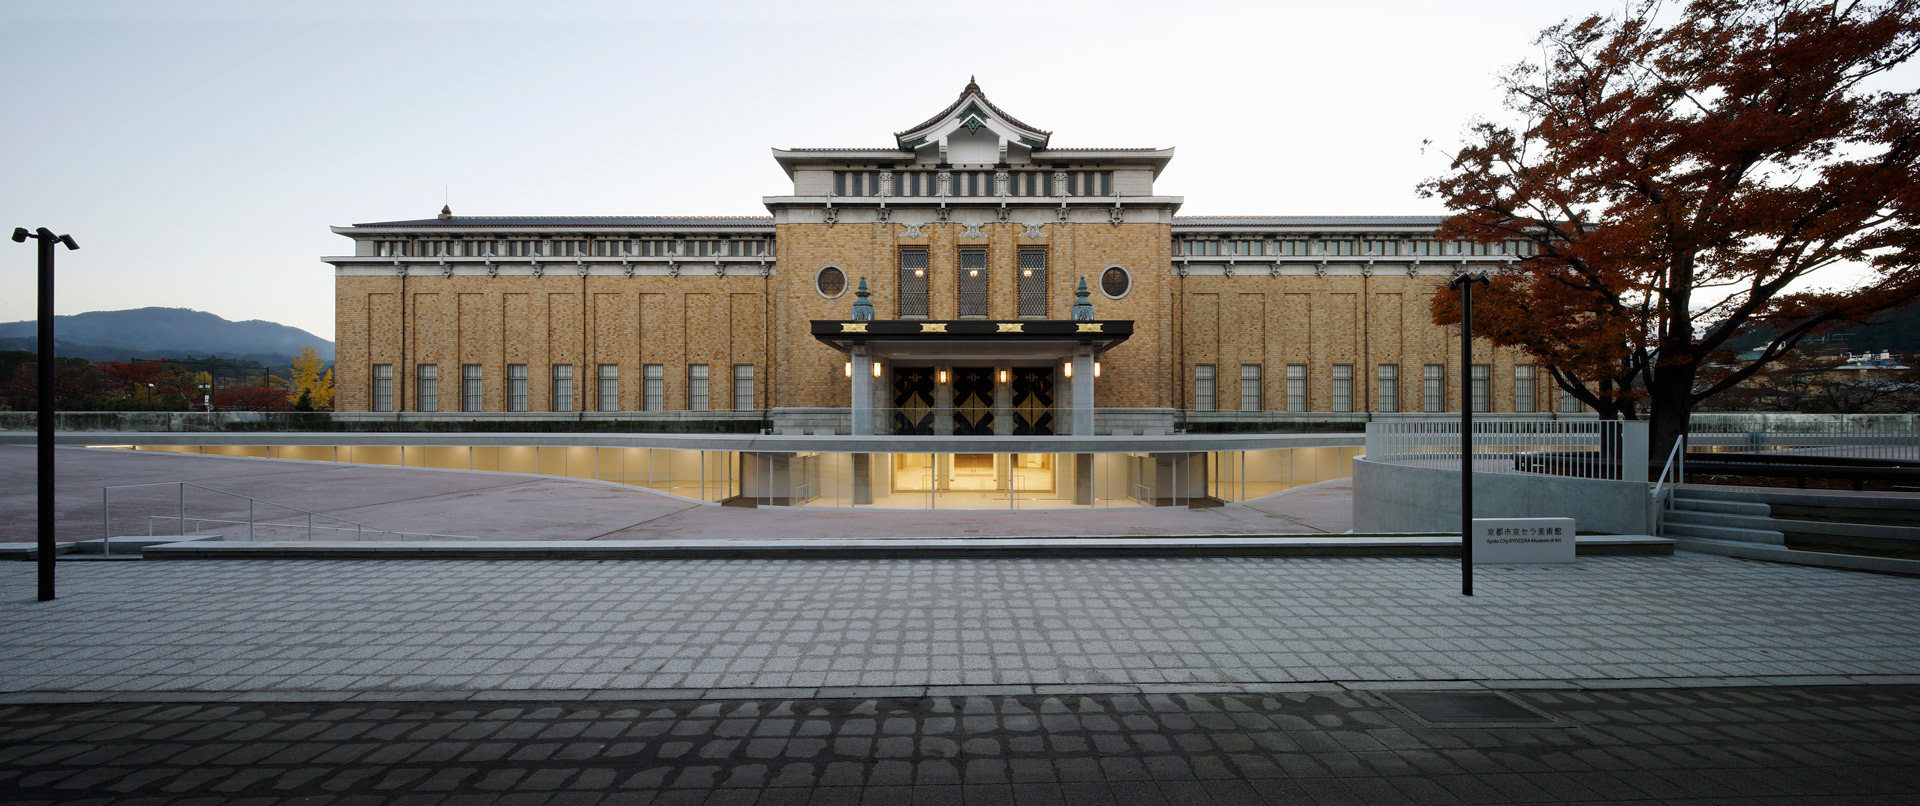 Gallery of LOUIS VUITTON Maison Osaka Midosuji / Jun Aoki & Associates - 21